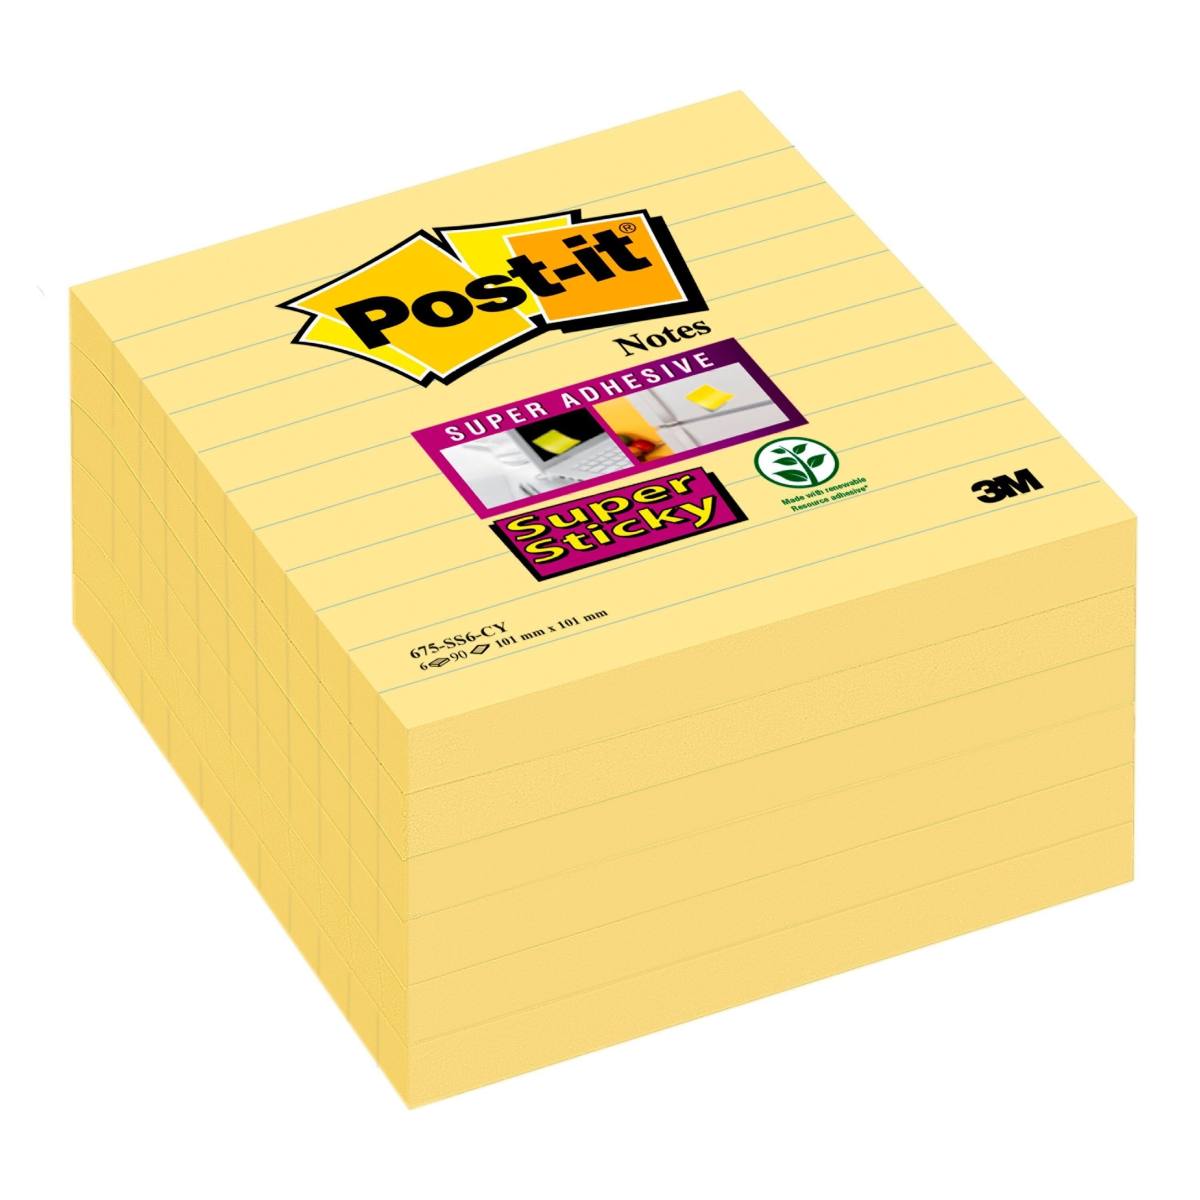 3M Post-it Super Sticky Notes 675-6SCY, 101 mm x 101 mm, amarillo, 6 blocs de 90 hojas cada uno